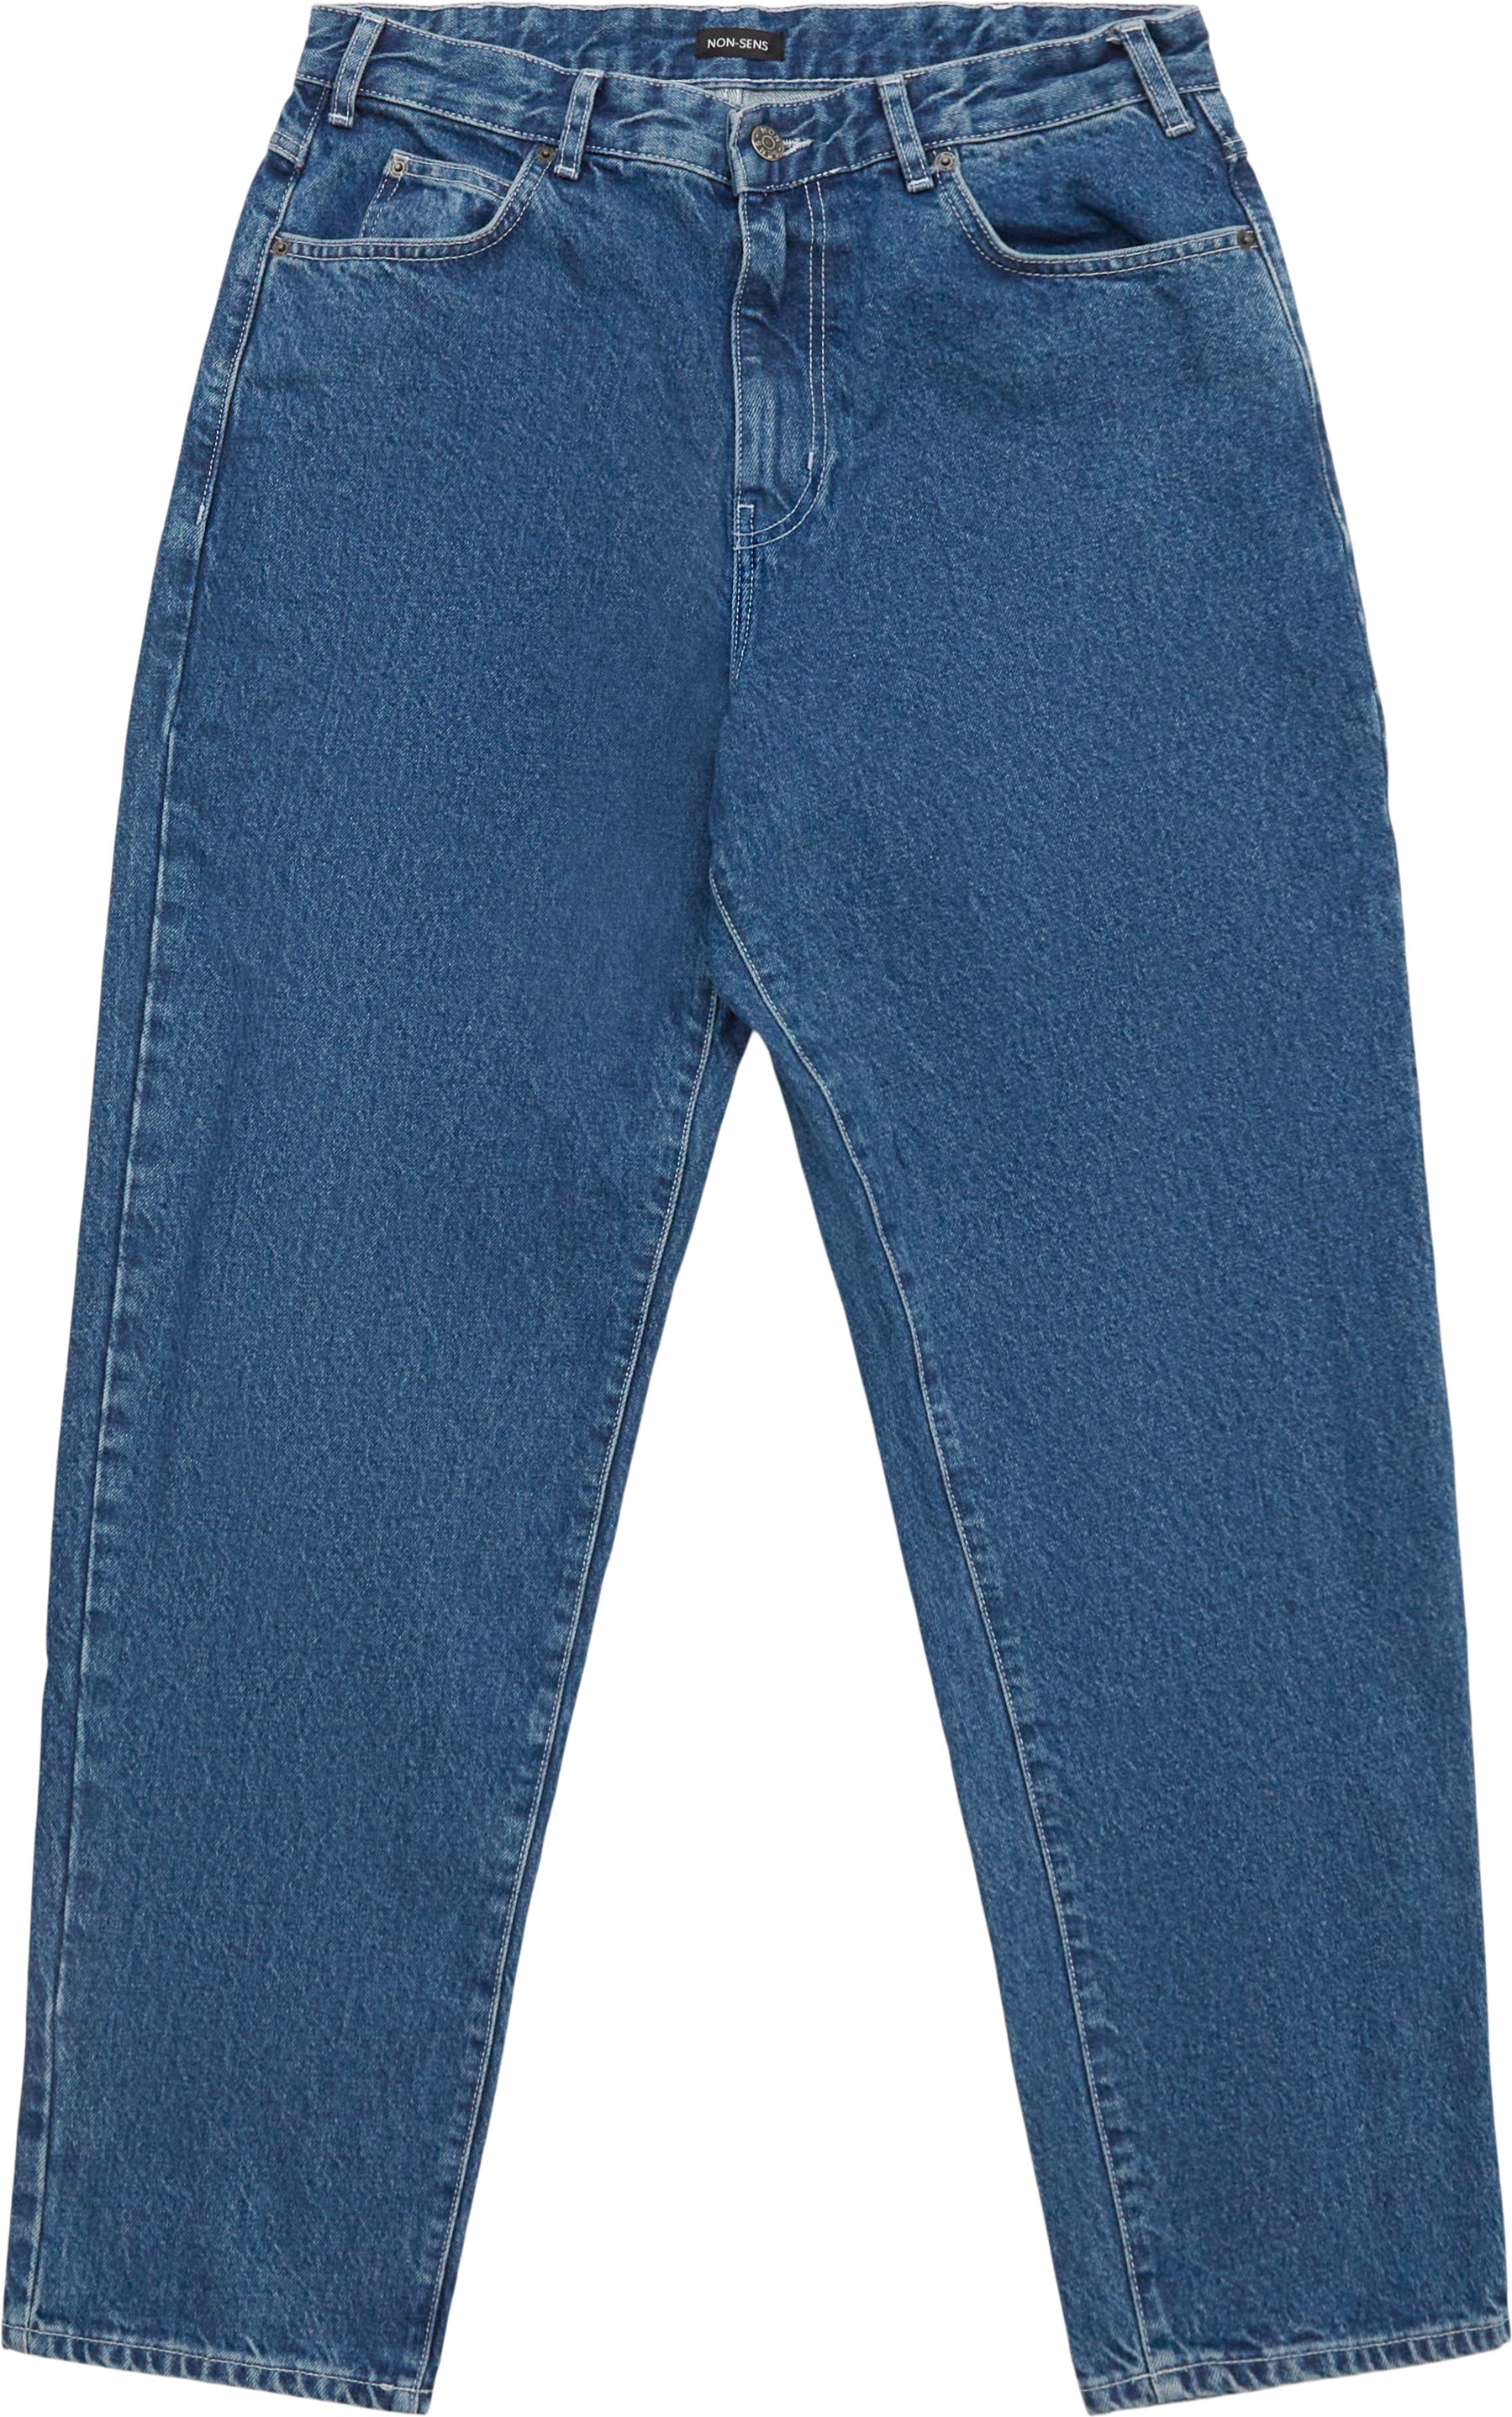 Non-Sens Jeans ALASKA STONE BLUE Denim